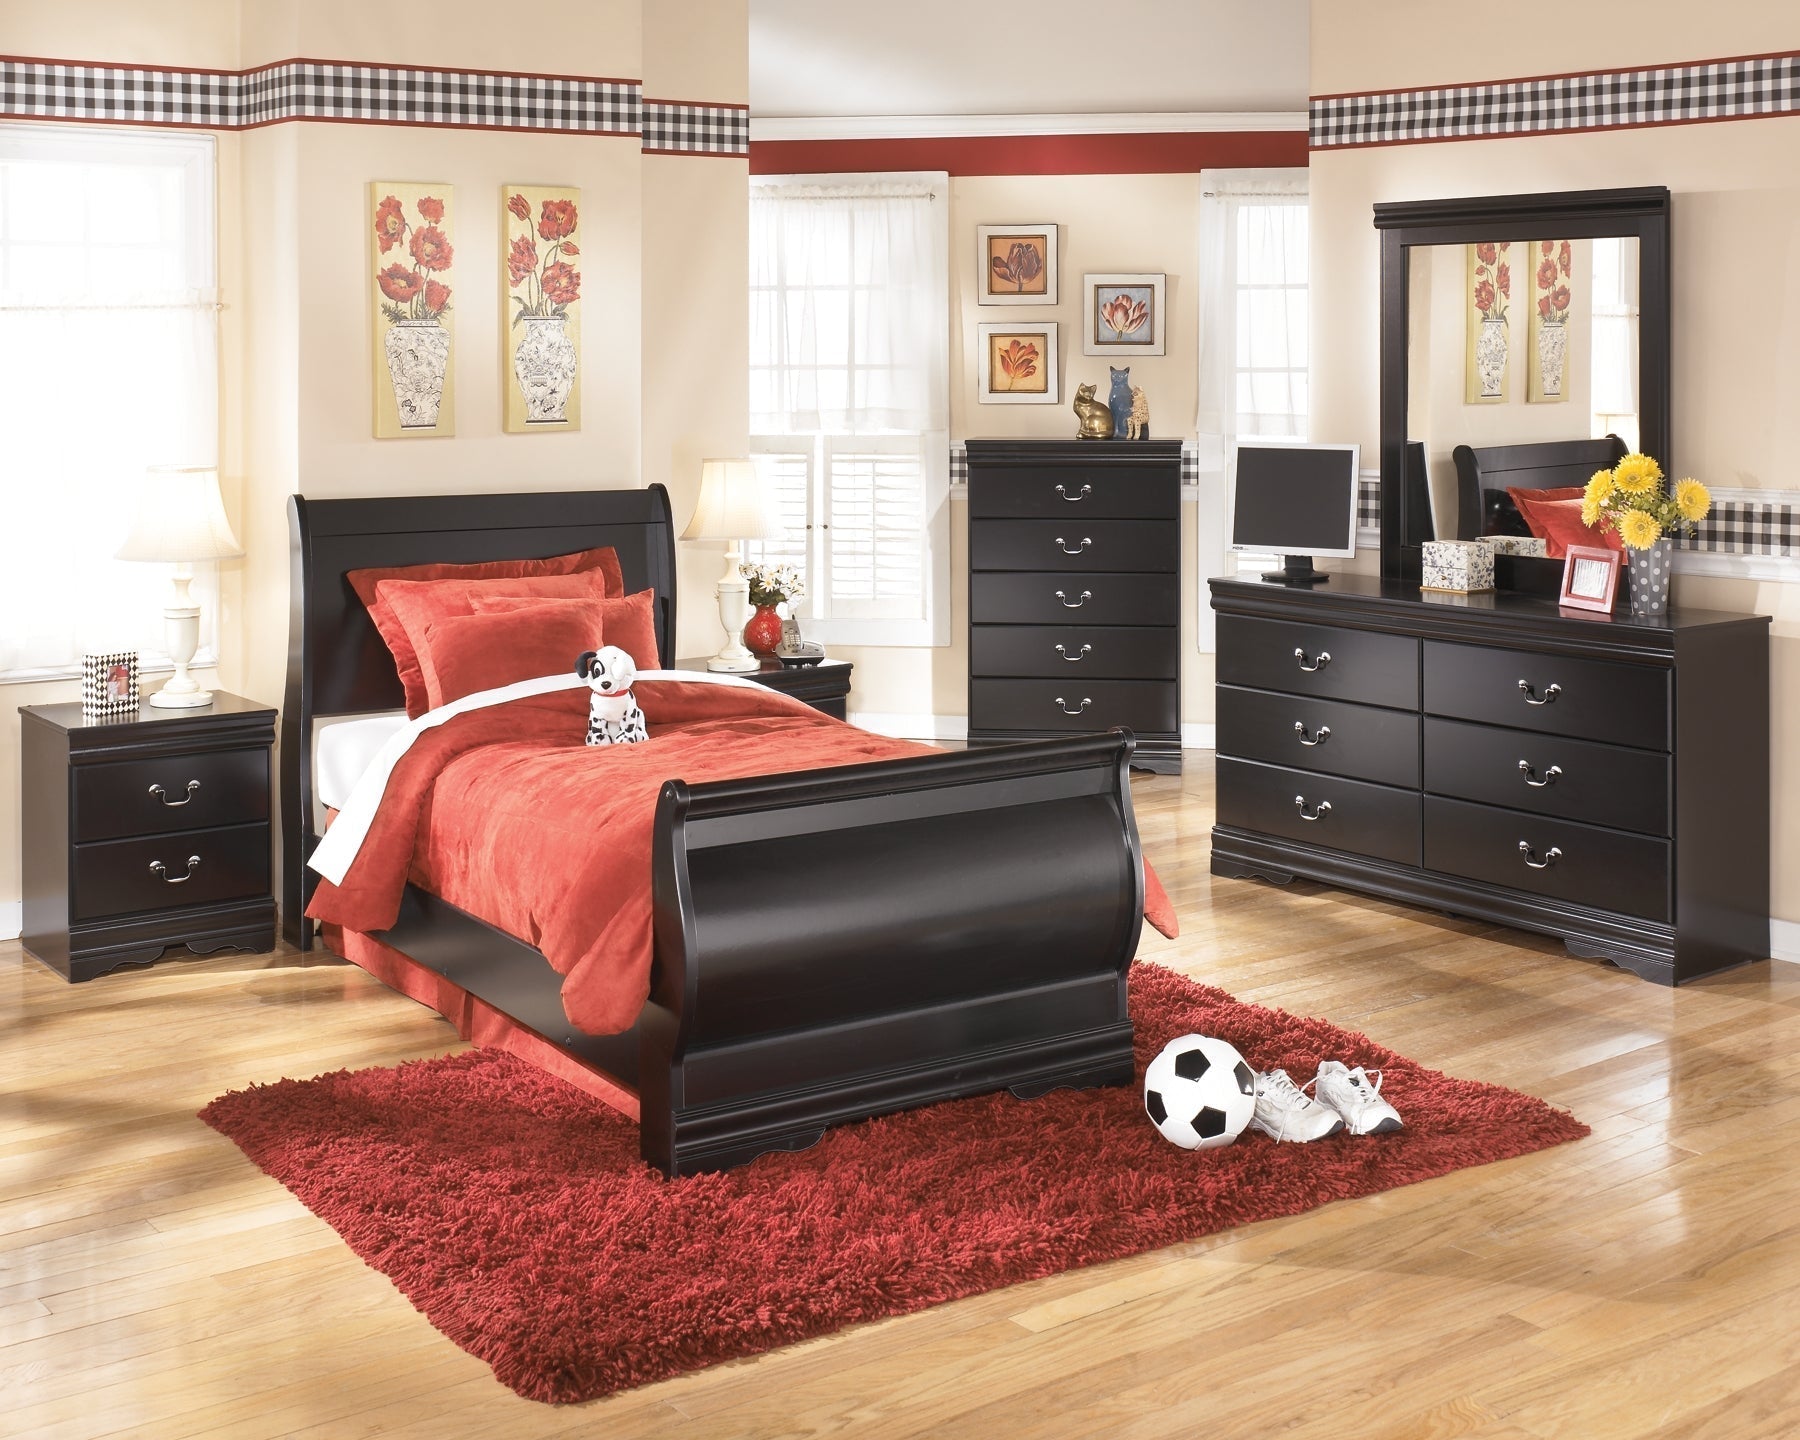 Huey Vineyard Dresser and Mirror at Towne & Country Furniture (AL) furniture, home furniture, home decor, sofa, bedding